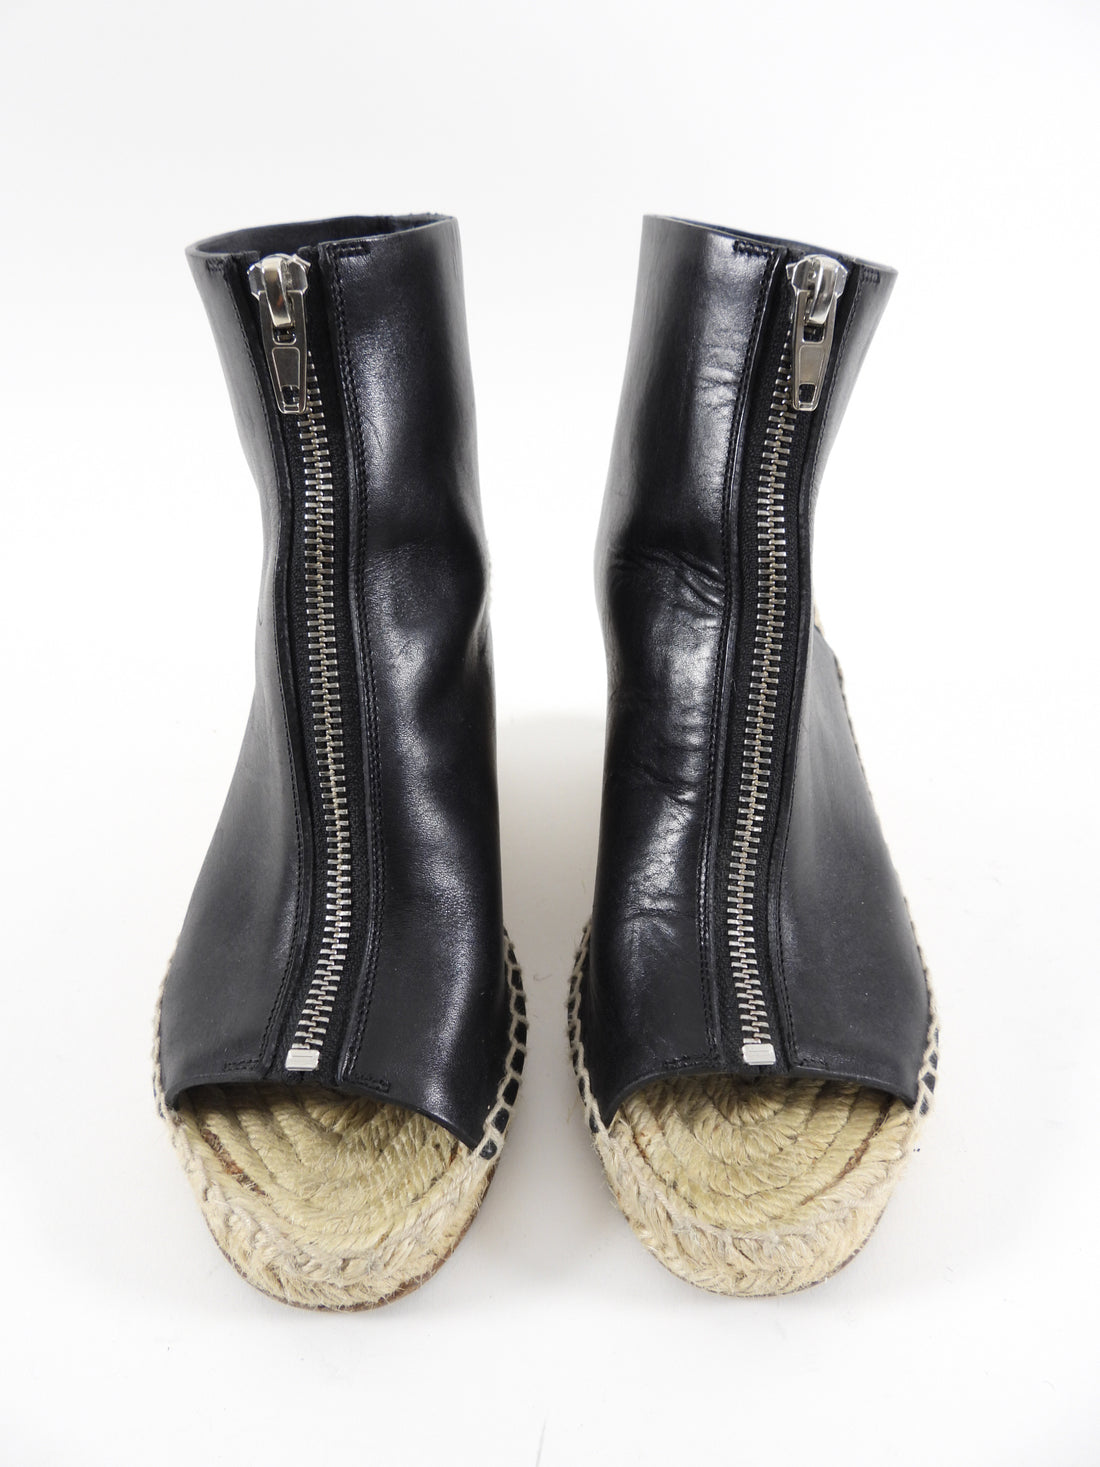 Celine Phoebe Philo Black Leather Espadrille Wedge Shoes - 37